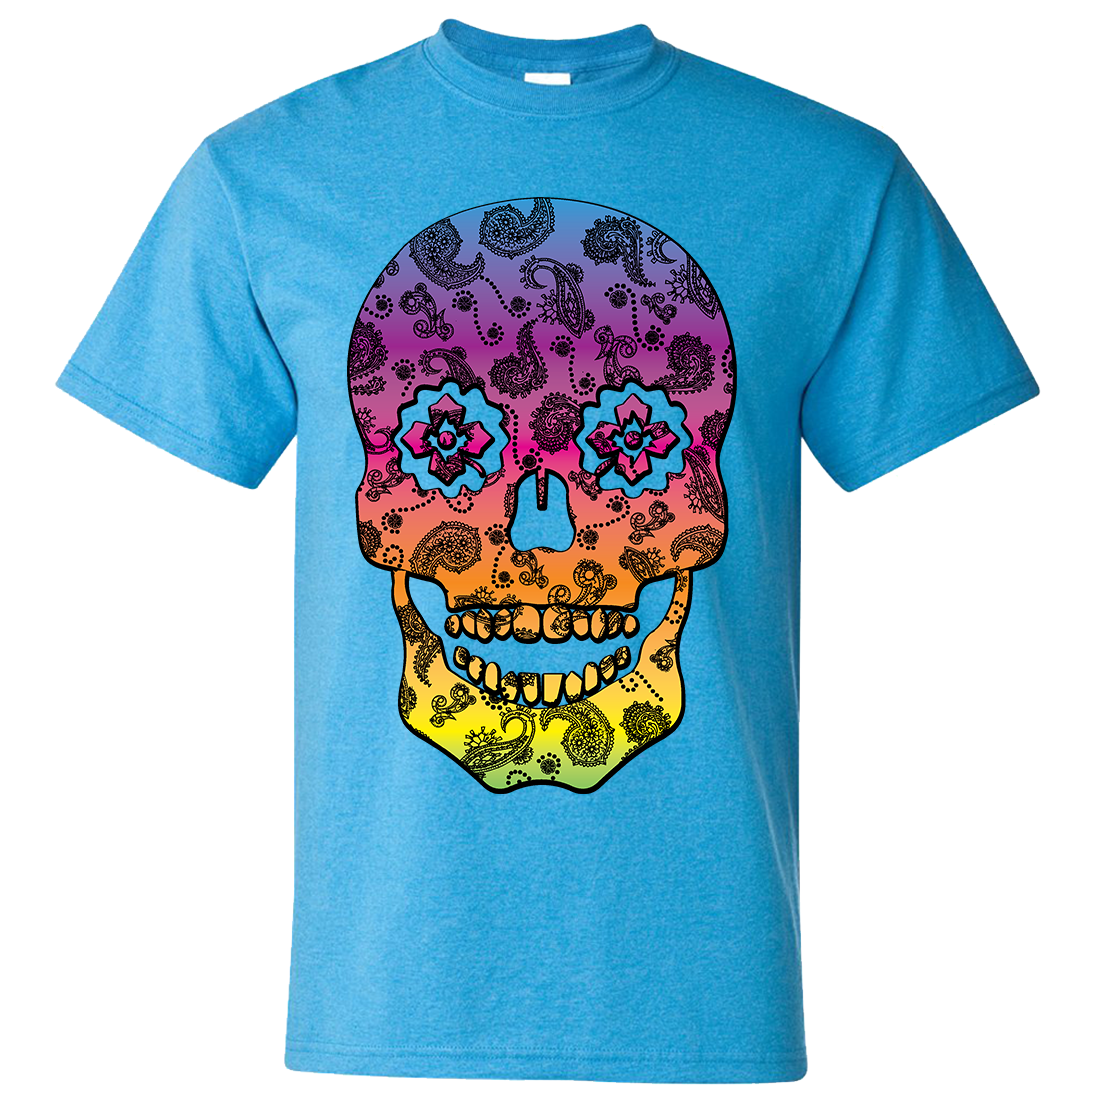 Neon Paisley Print Sugar Skull Asst Colors T Shirt Tee | eBay